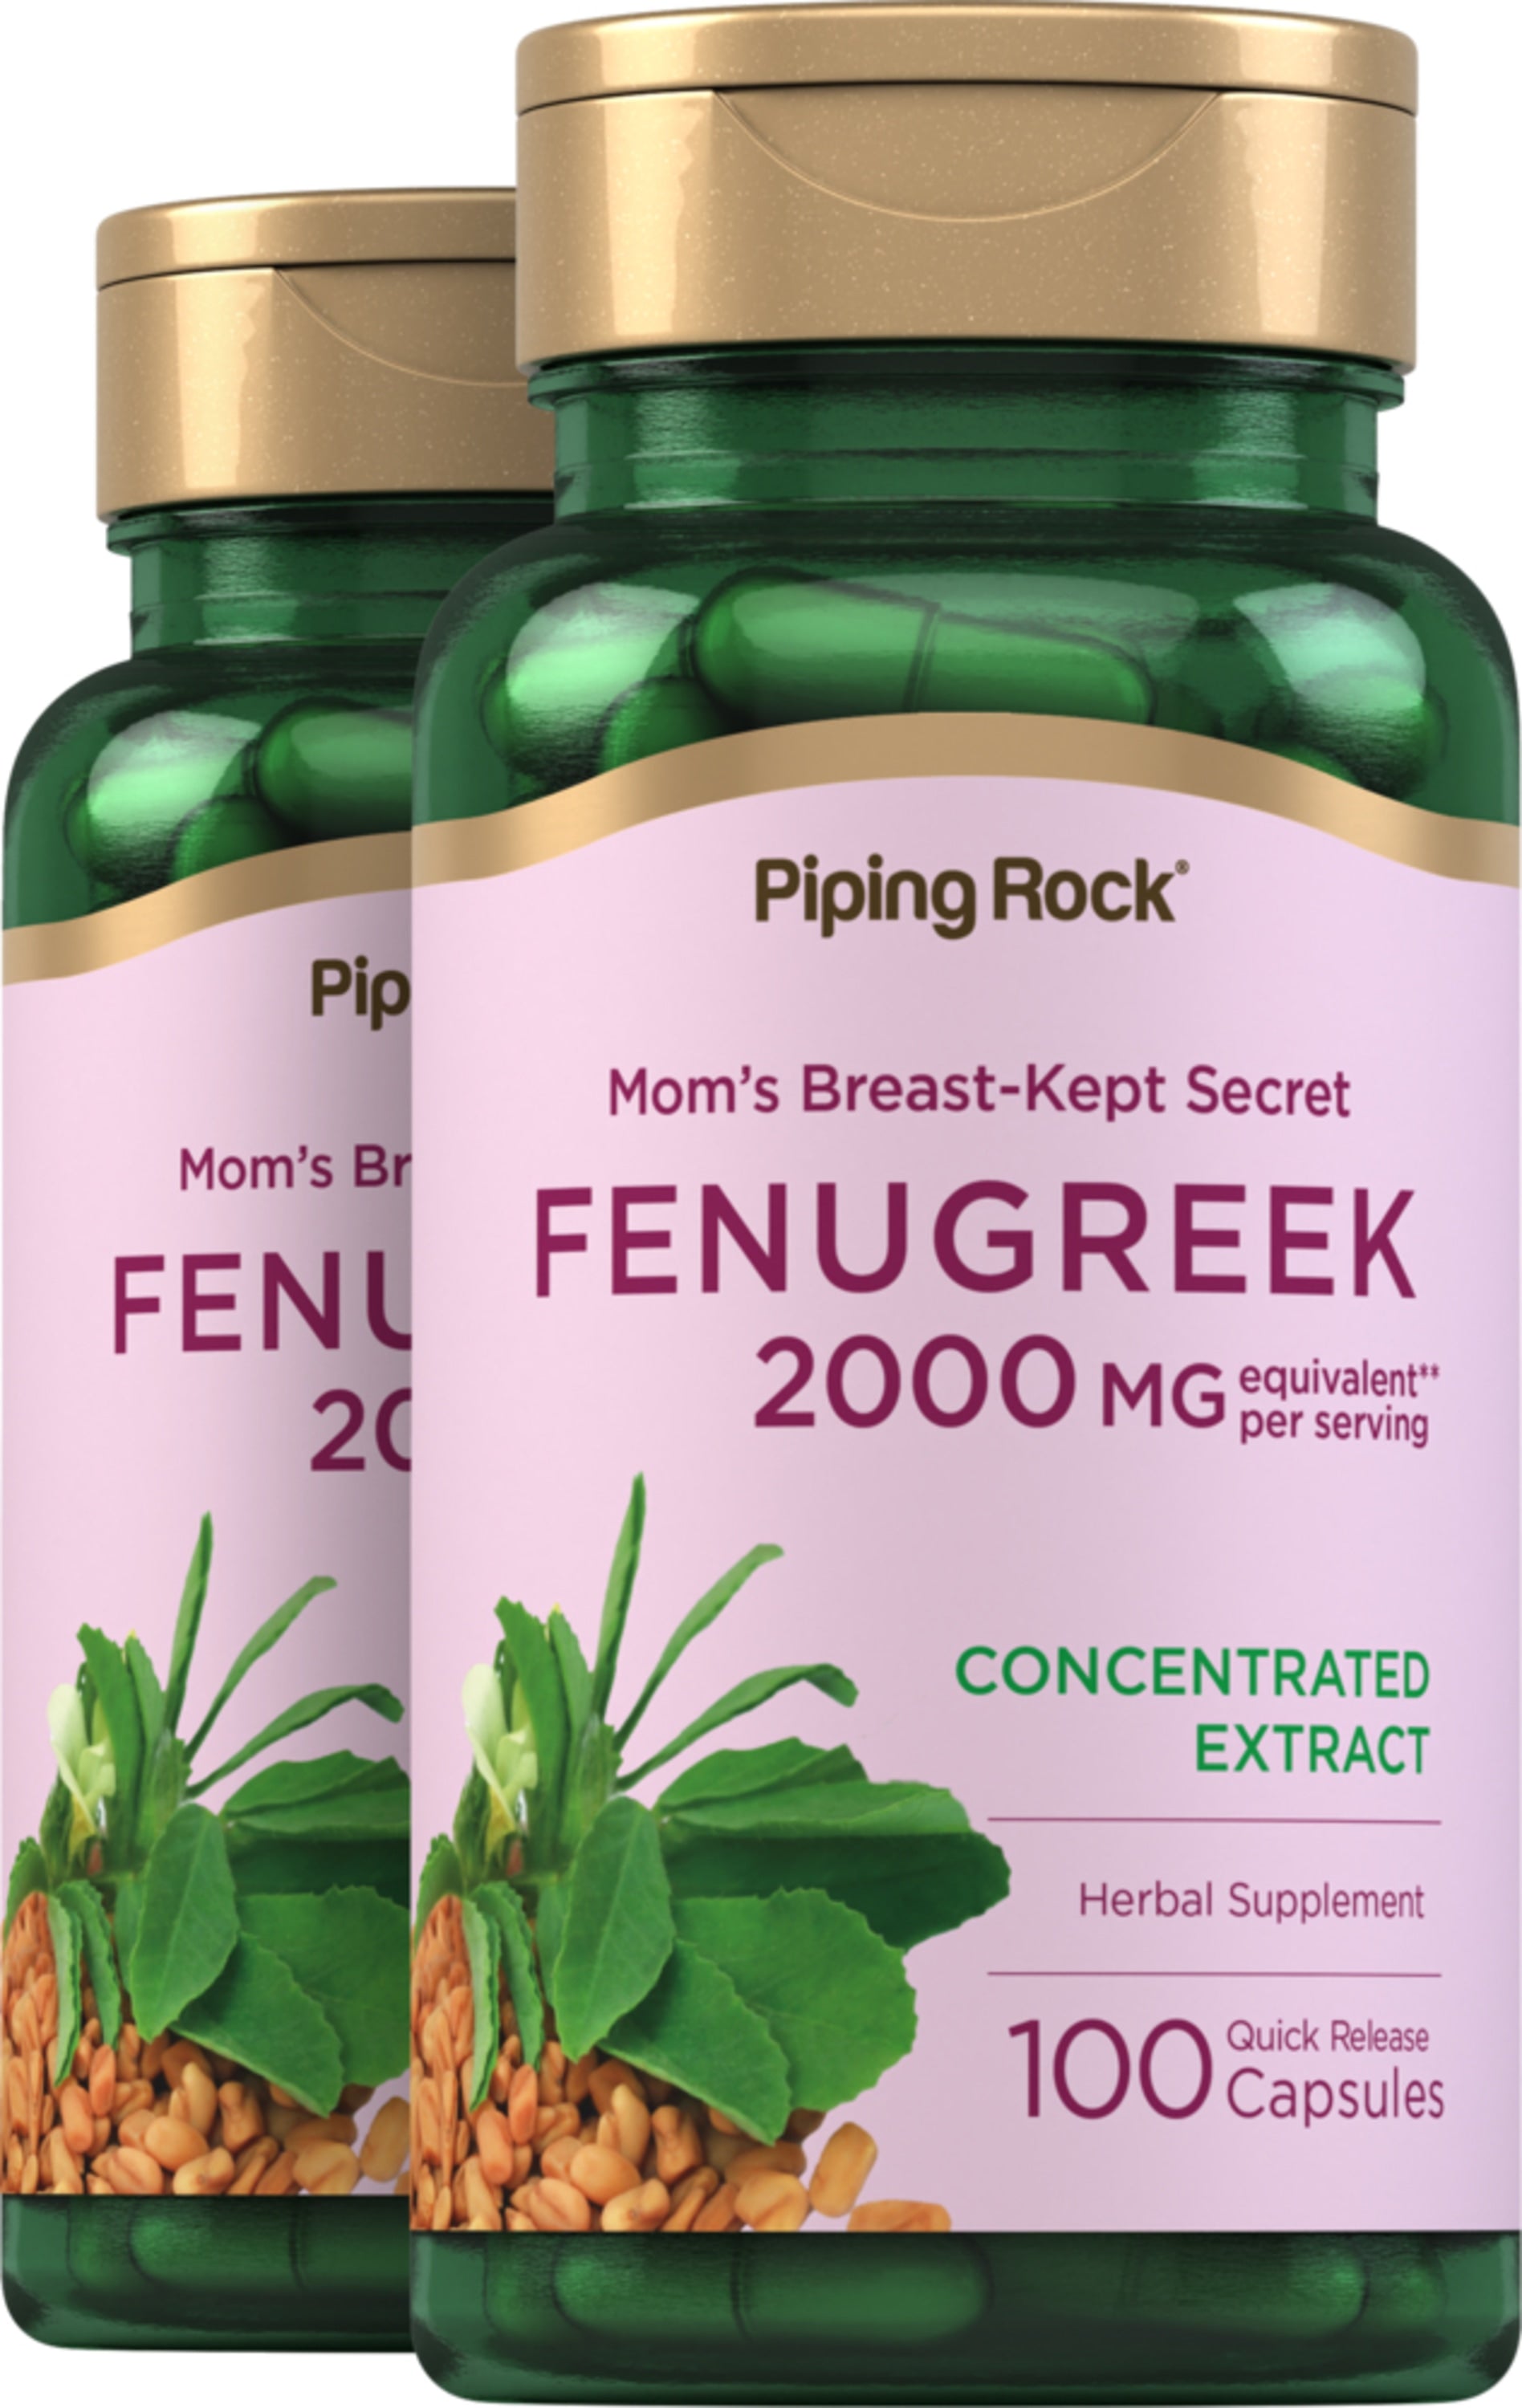 Fenouil Bio - 300 mg